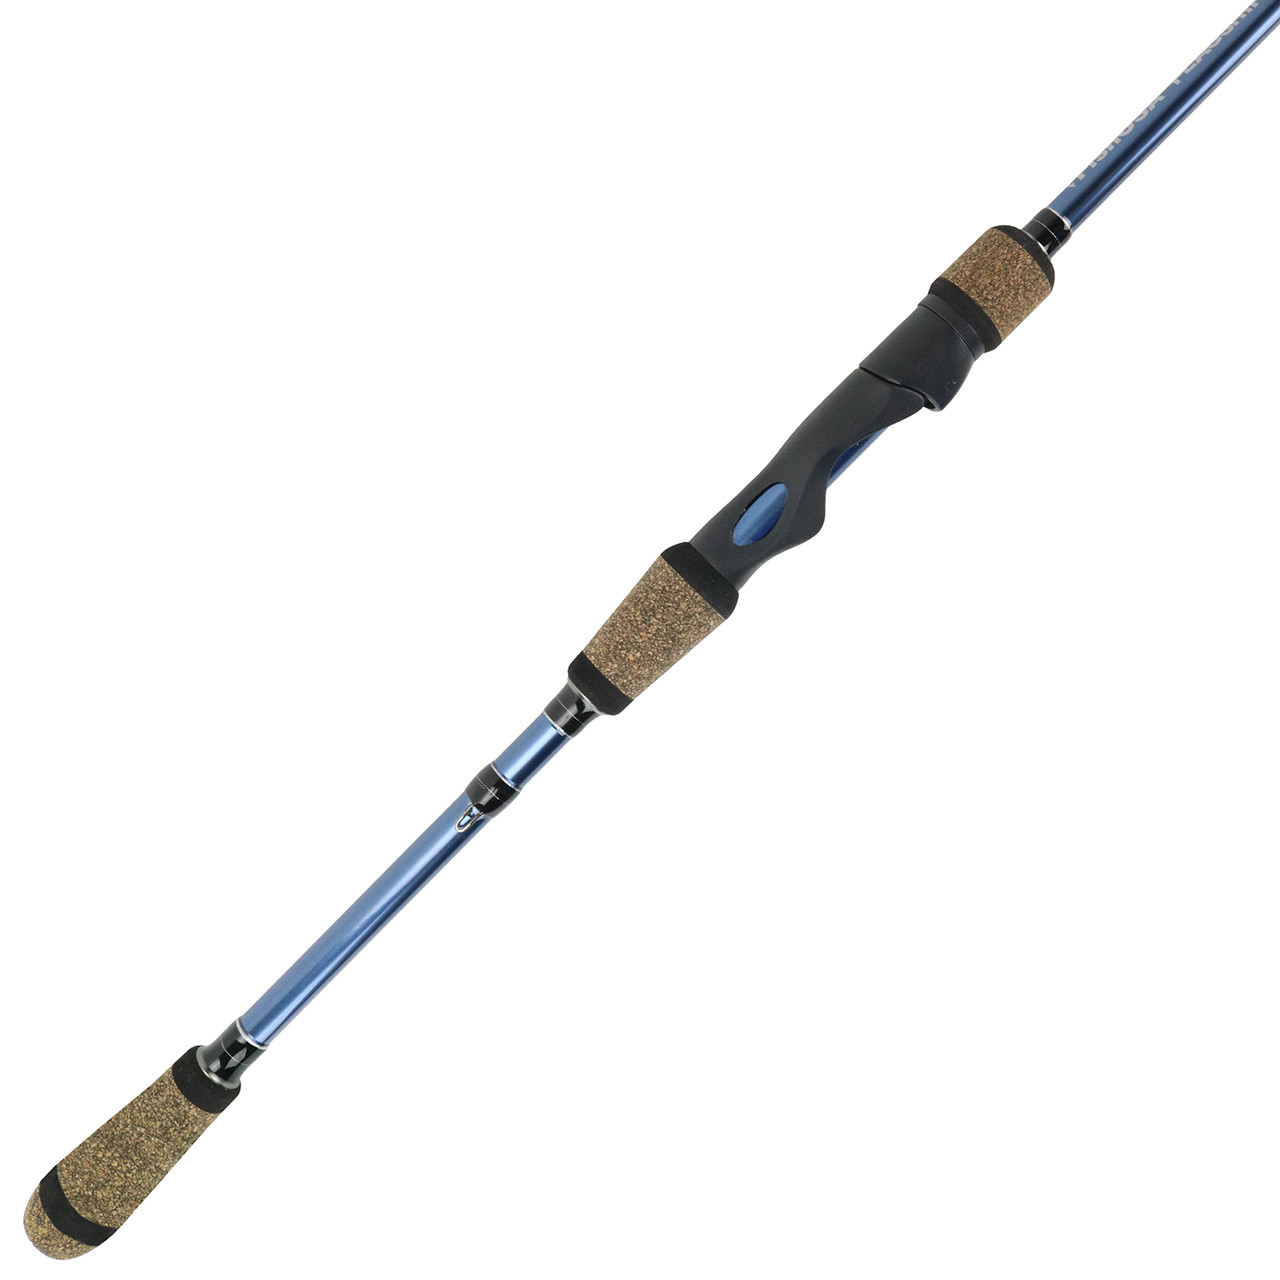 FishUSA Flagship Bass Spinning Rod | FFSHIP-BS-76-MLMF | FishUSA